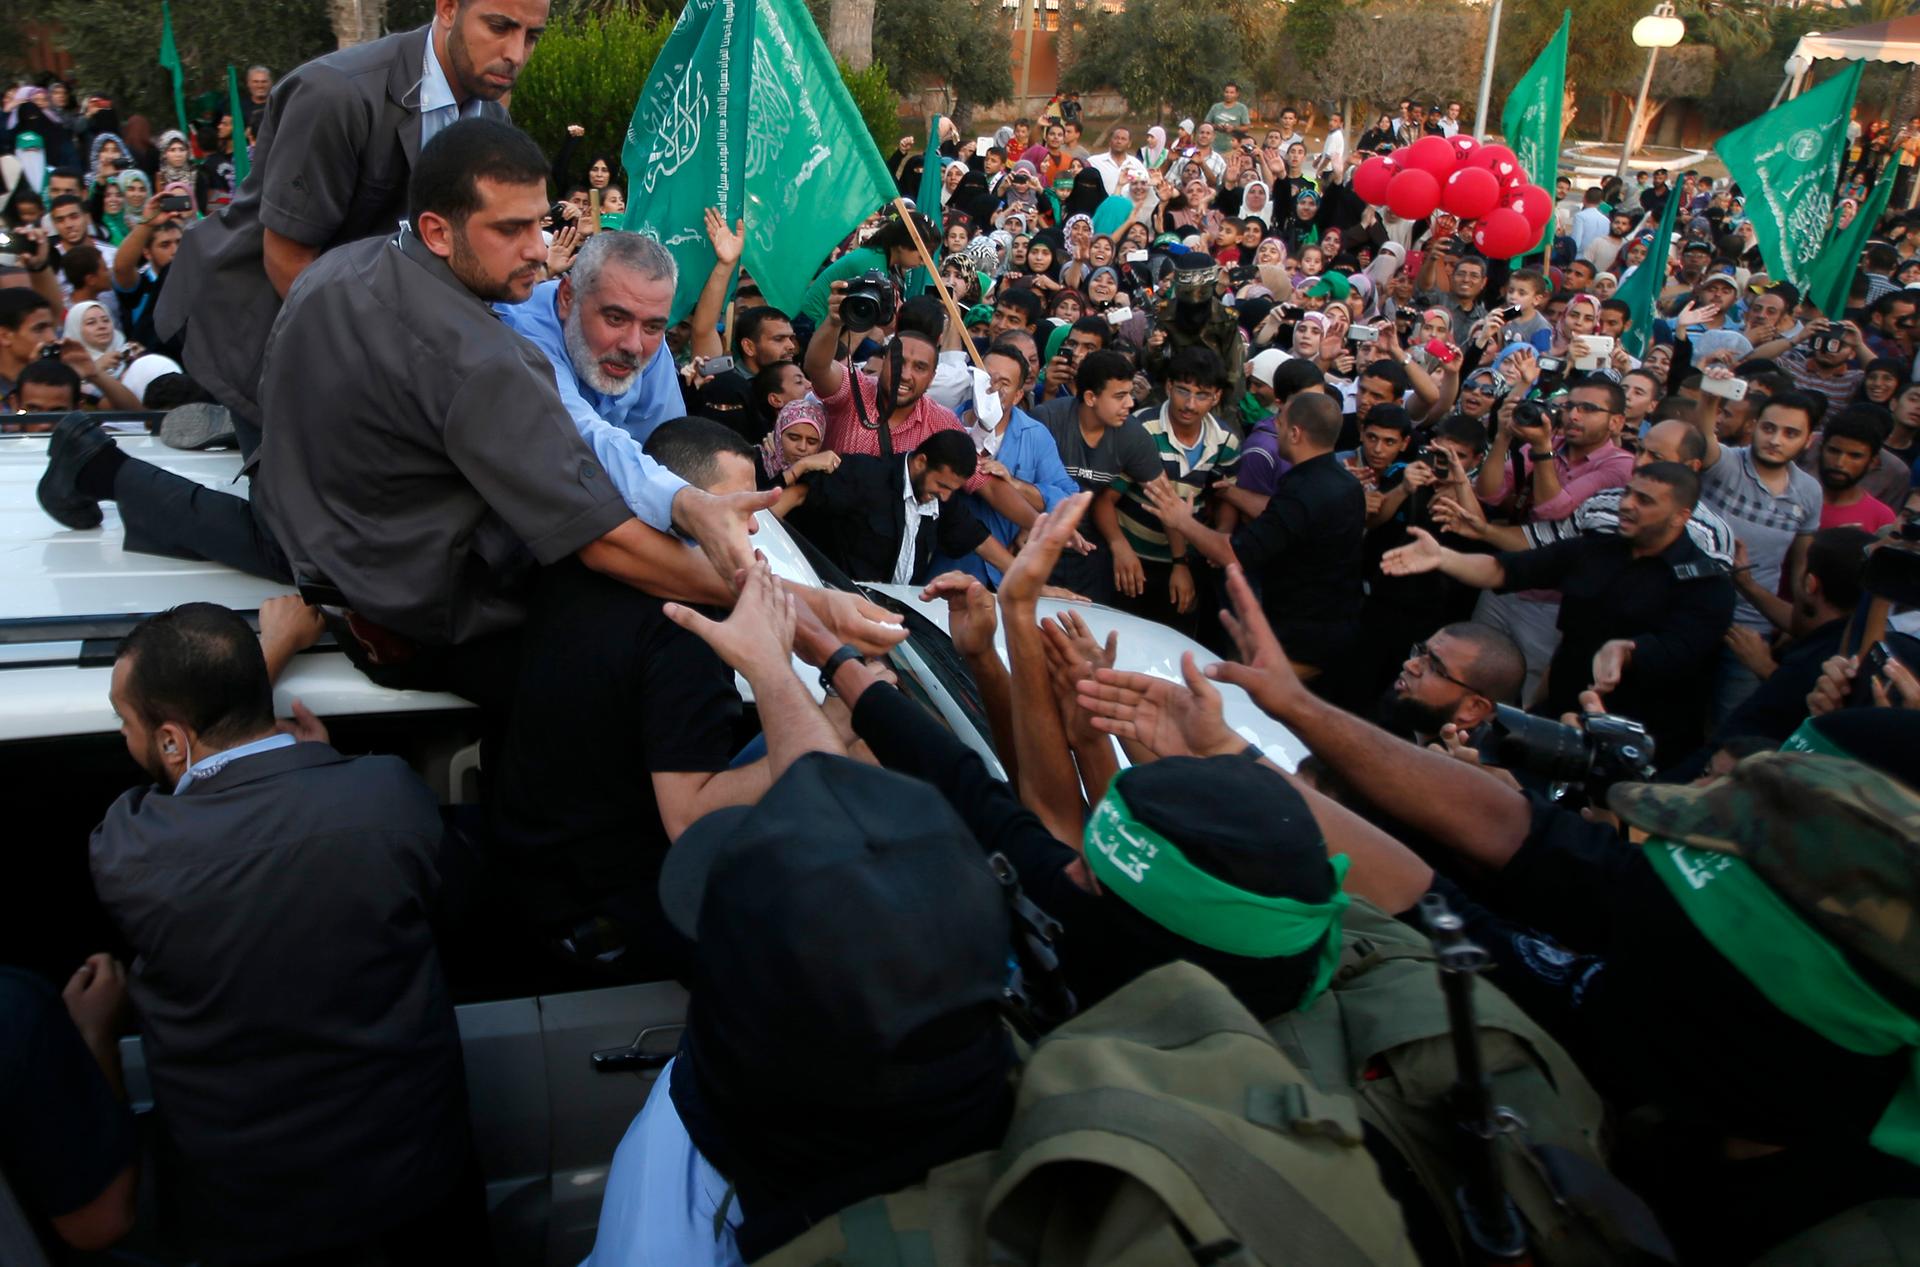 Hamas Gaza leader Ismail Haniyeh